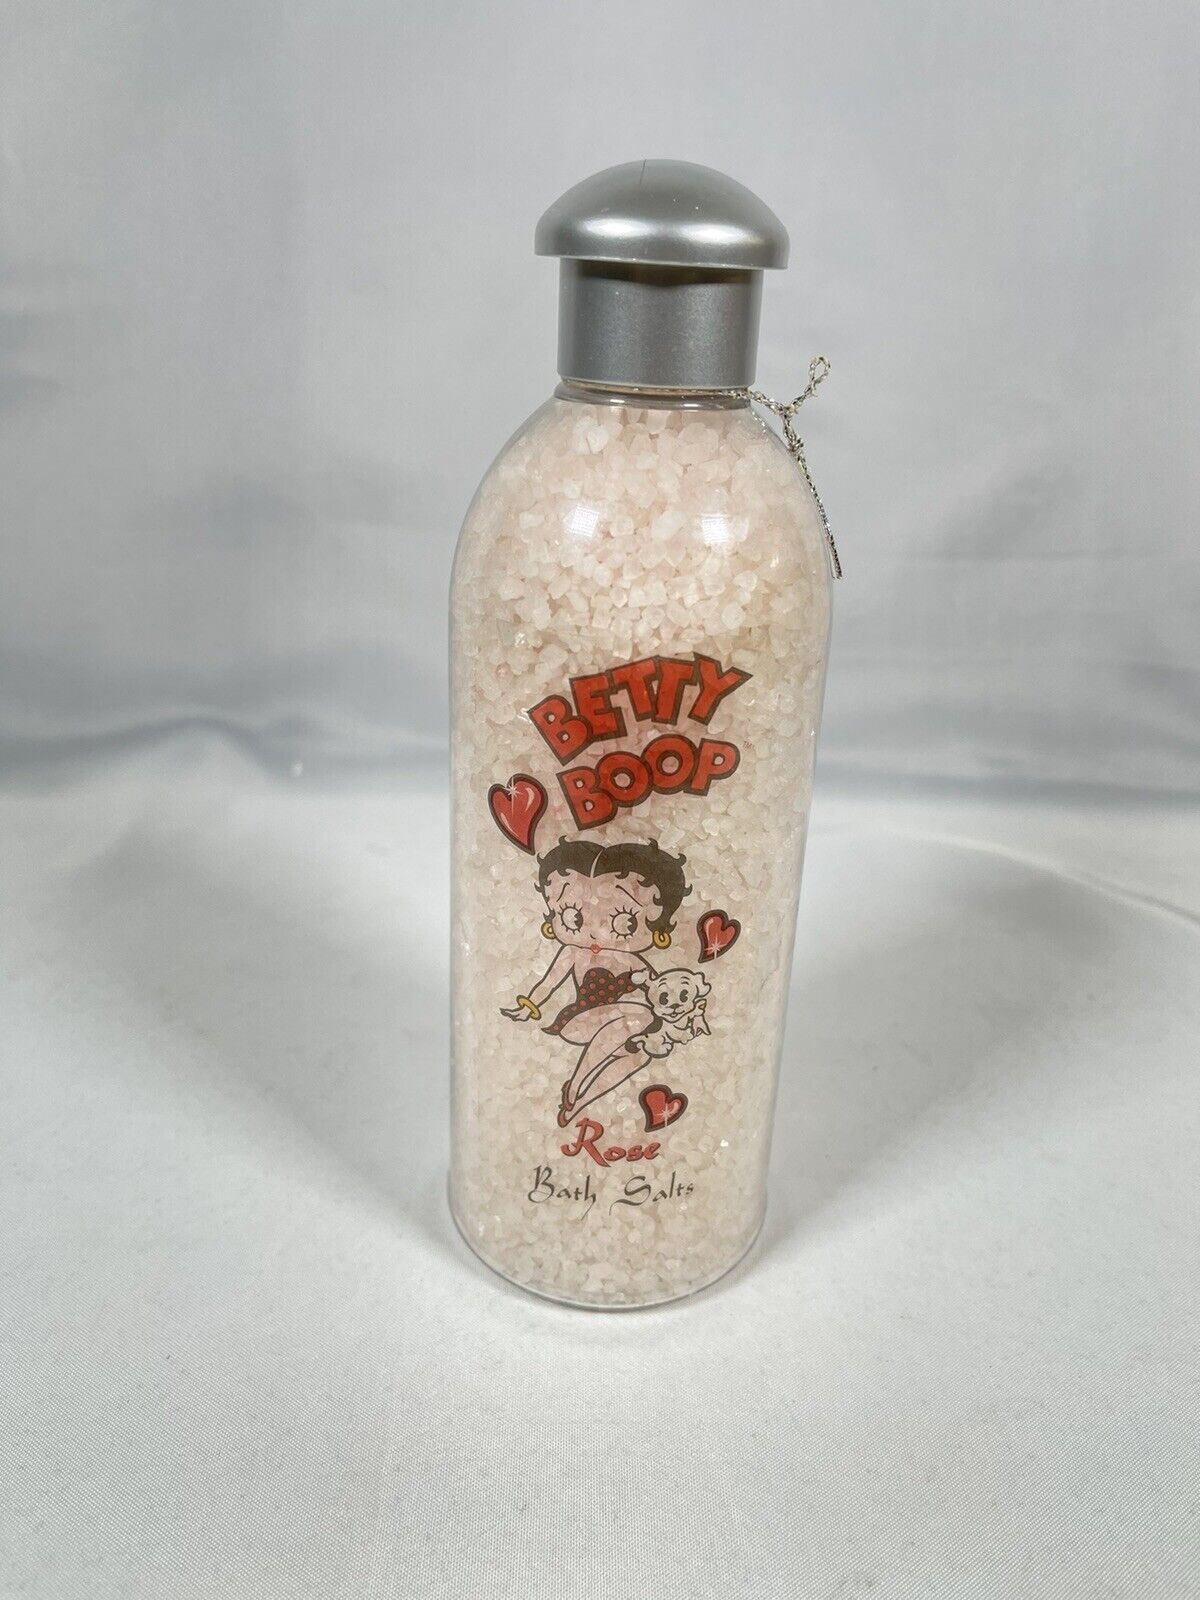 NEW Betty Boop Rose Bath Salt